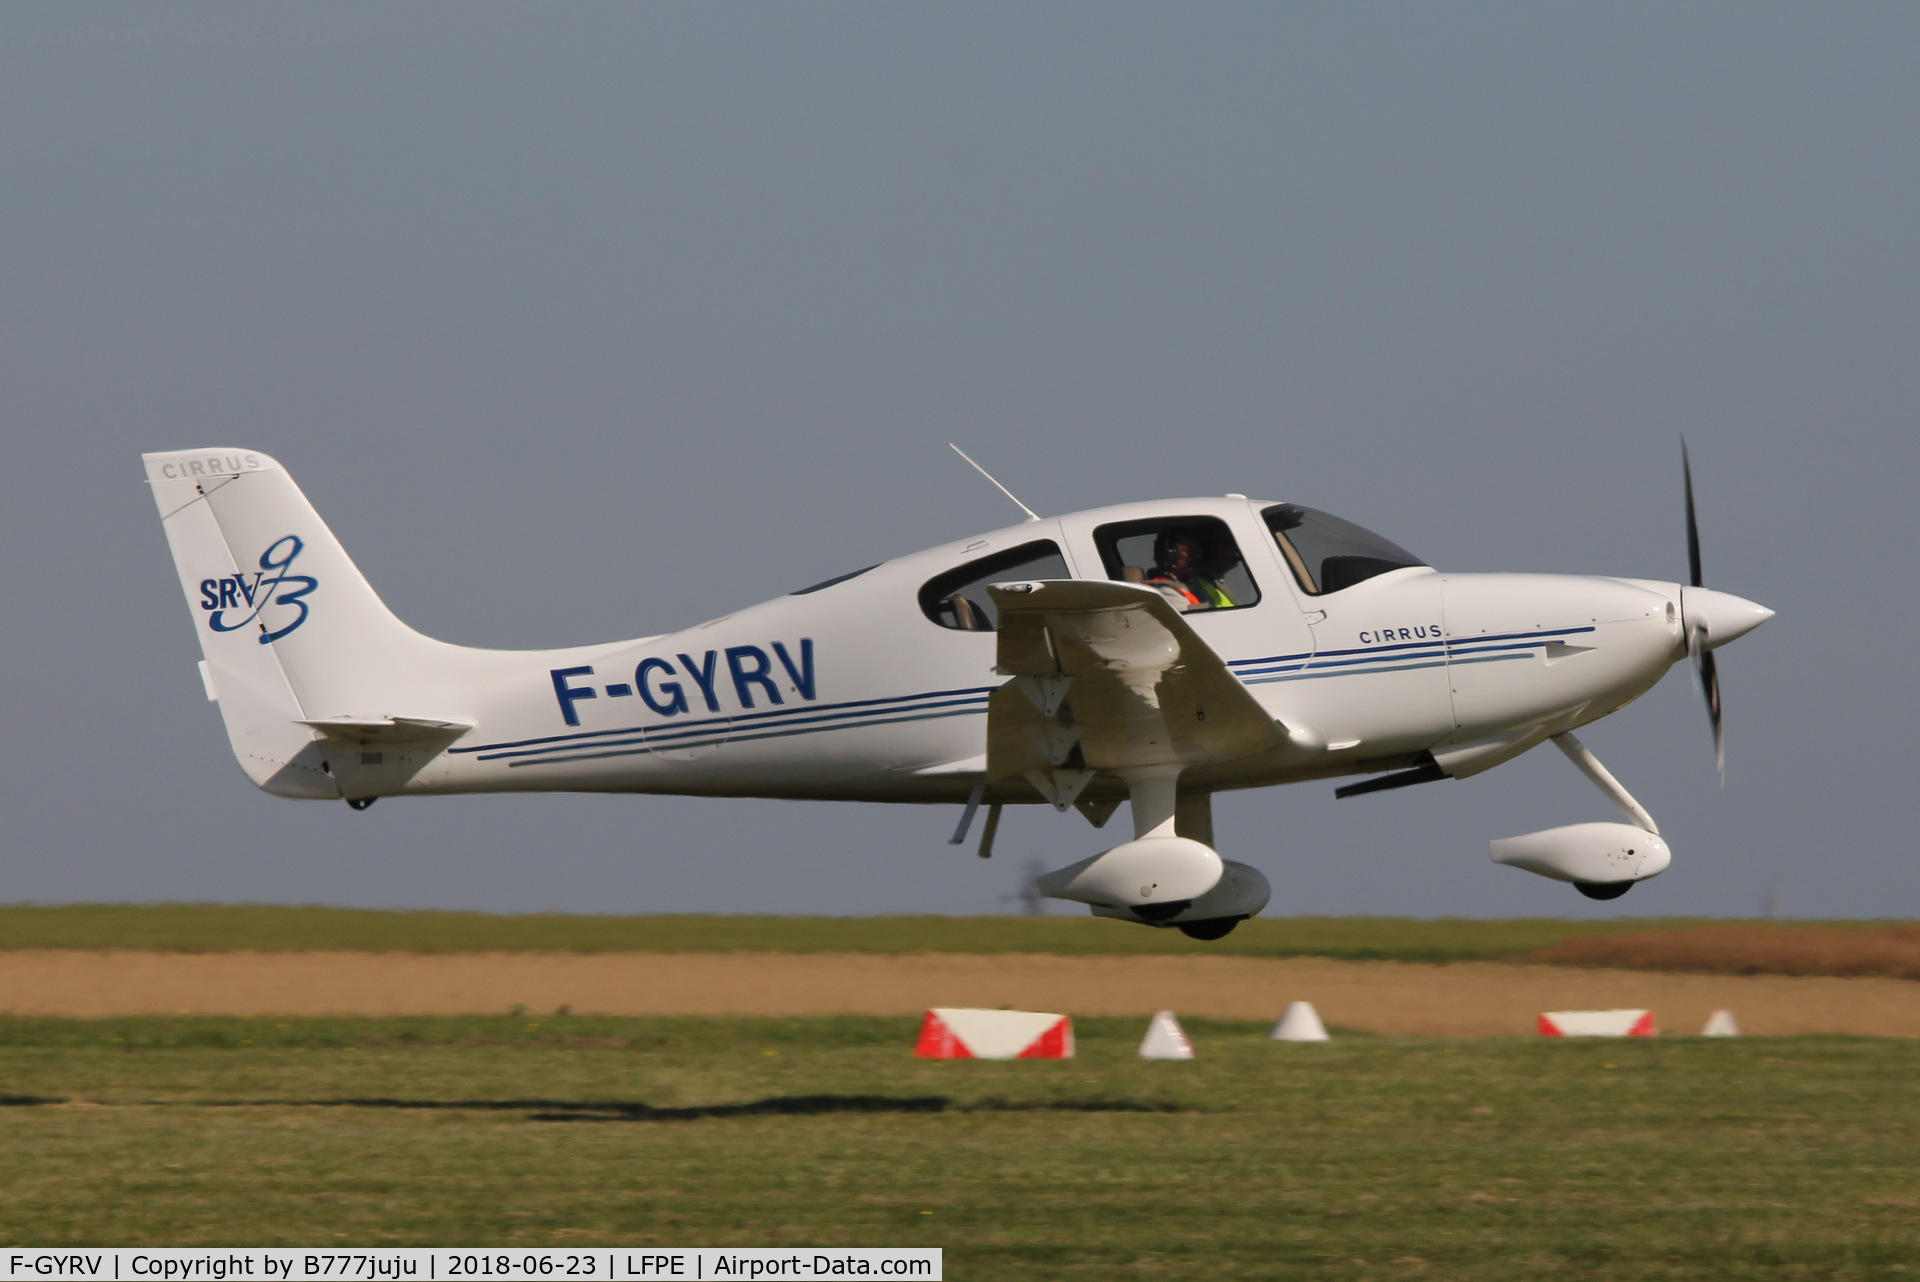 F-GYRV, 2008 Cirrus SRV G3 C/N 1903, at Meaux Airshow